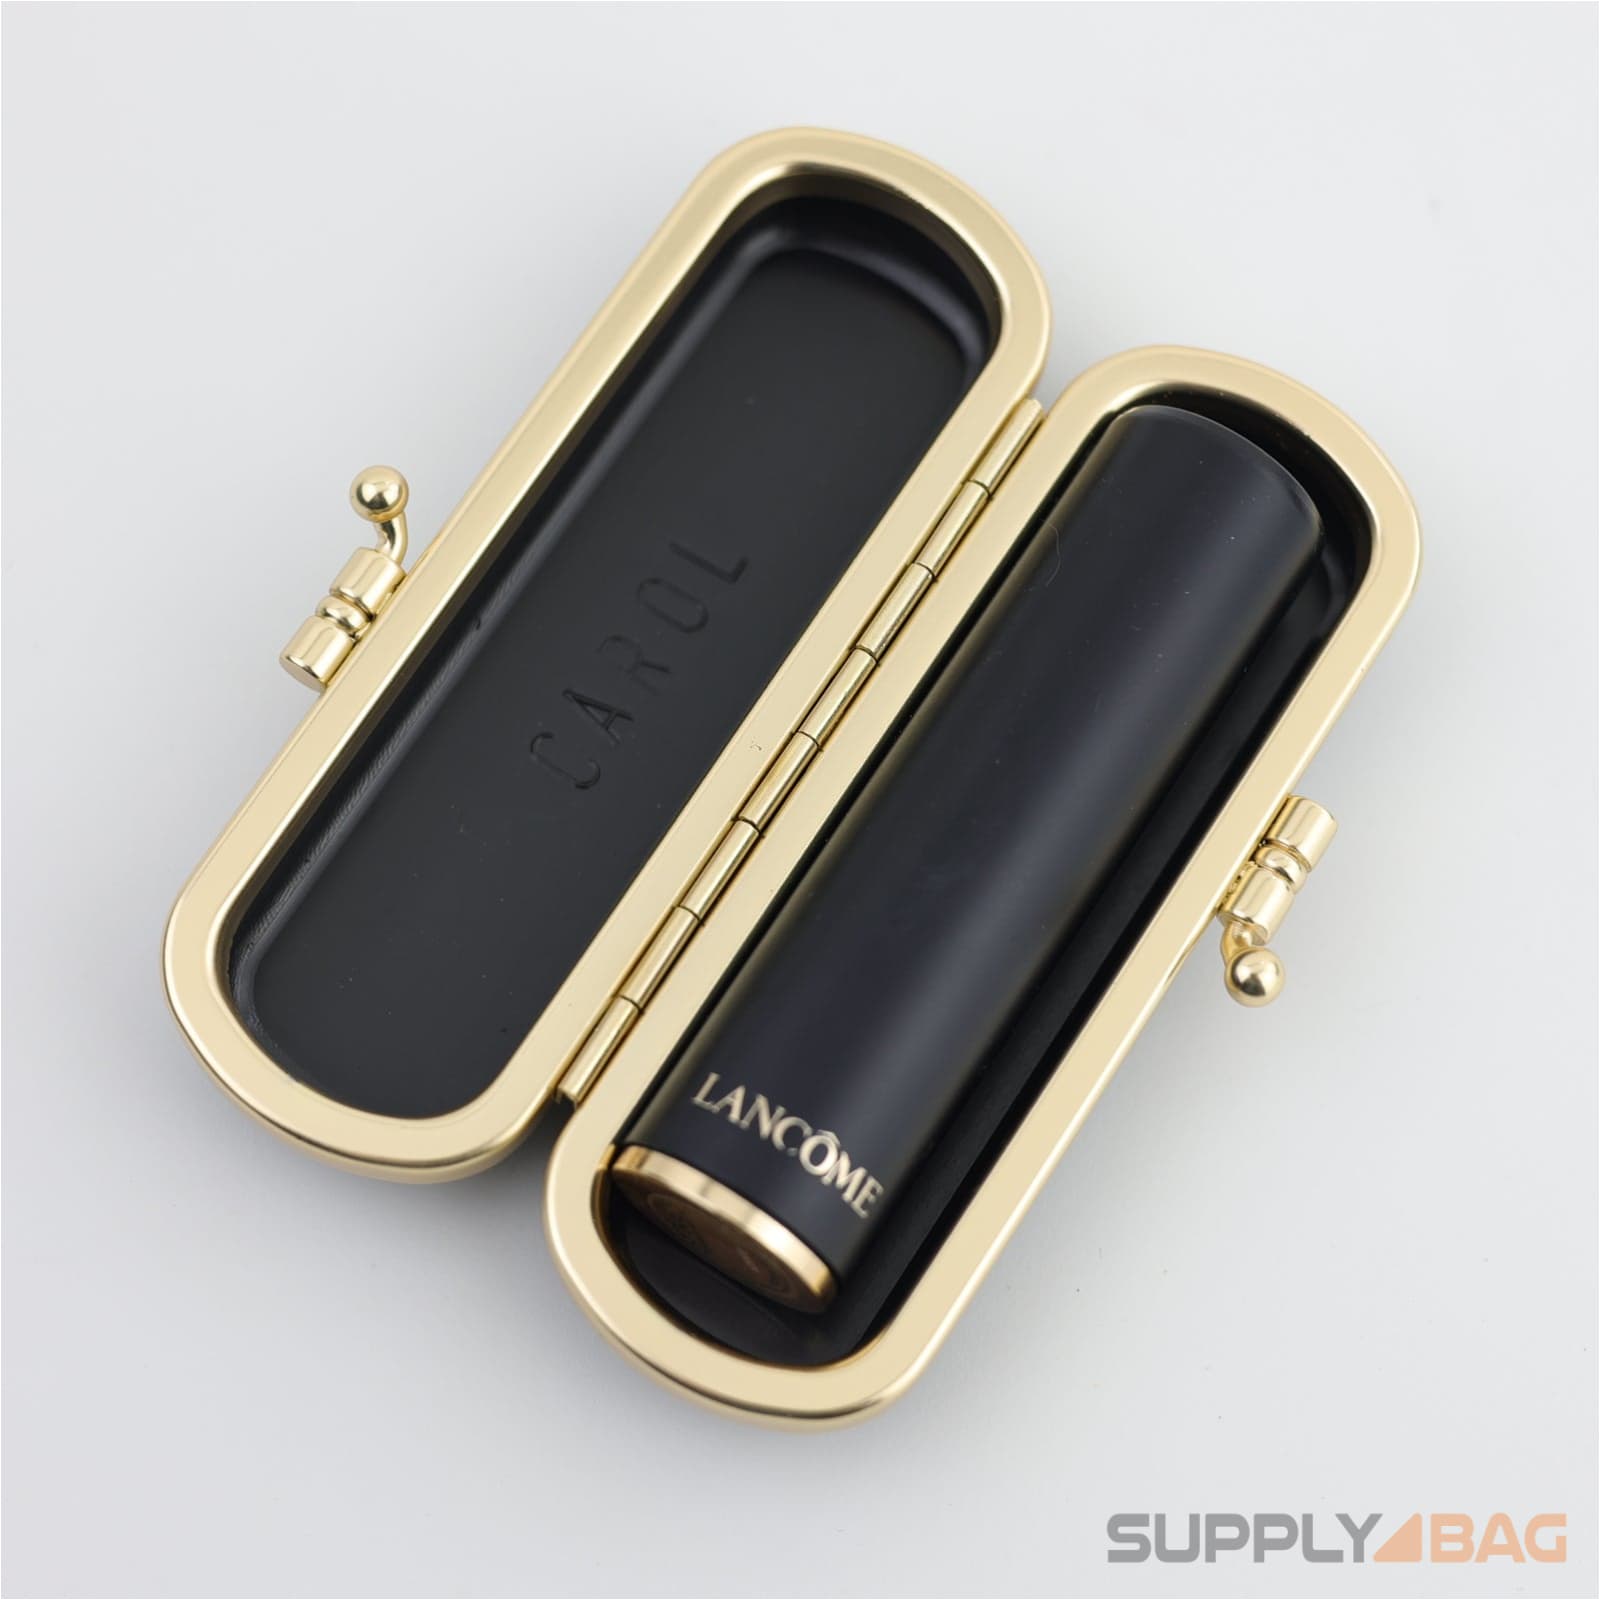 Mini box clutch matte gold for lipstick case